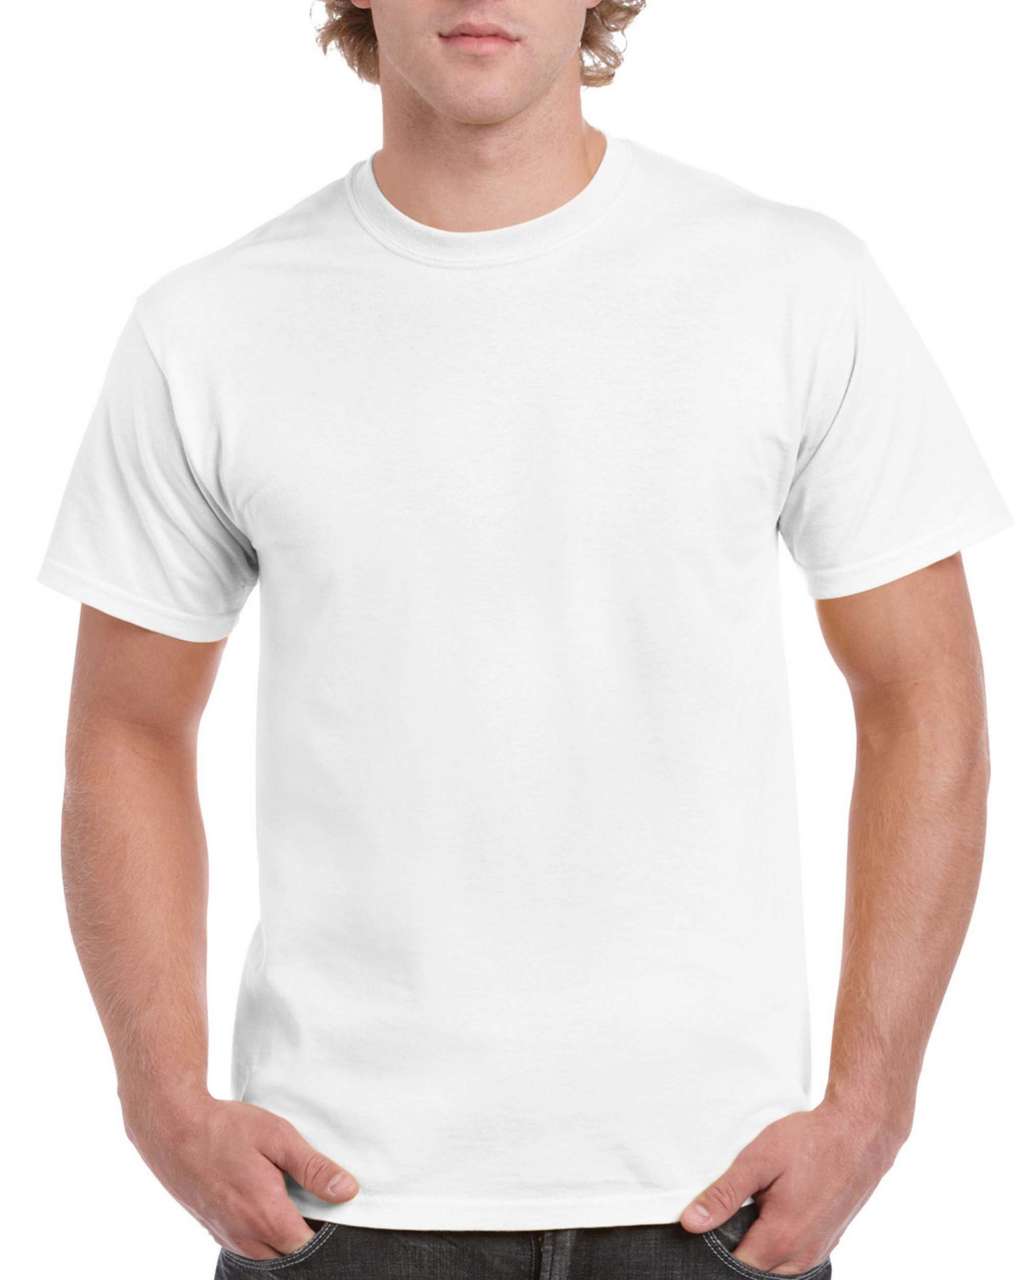 Gildan Hammer Adult T-shirt - Gildan Hammer Adult T-shirt - White